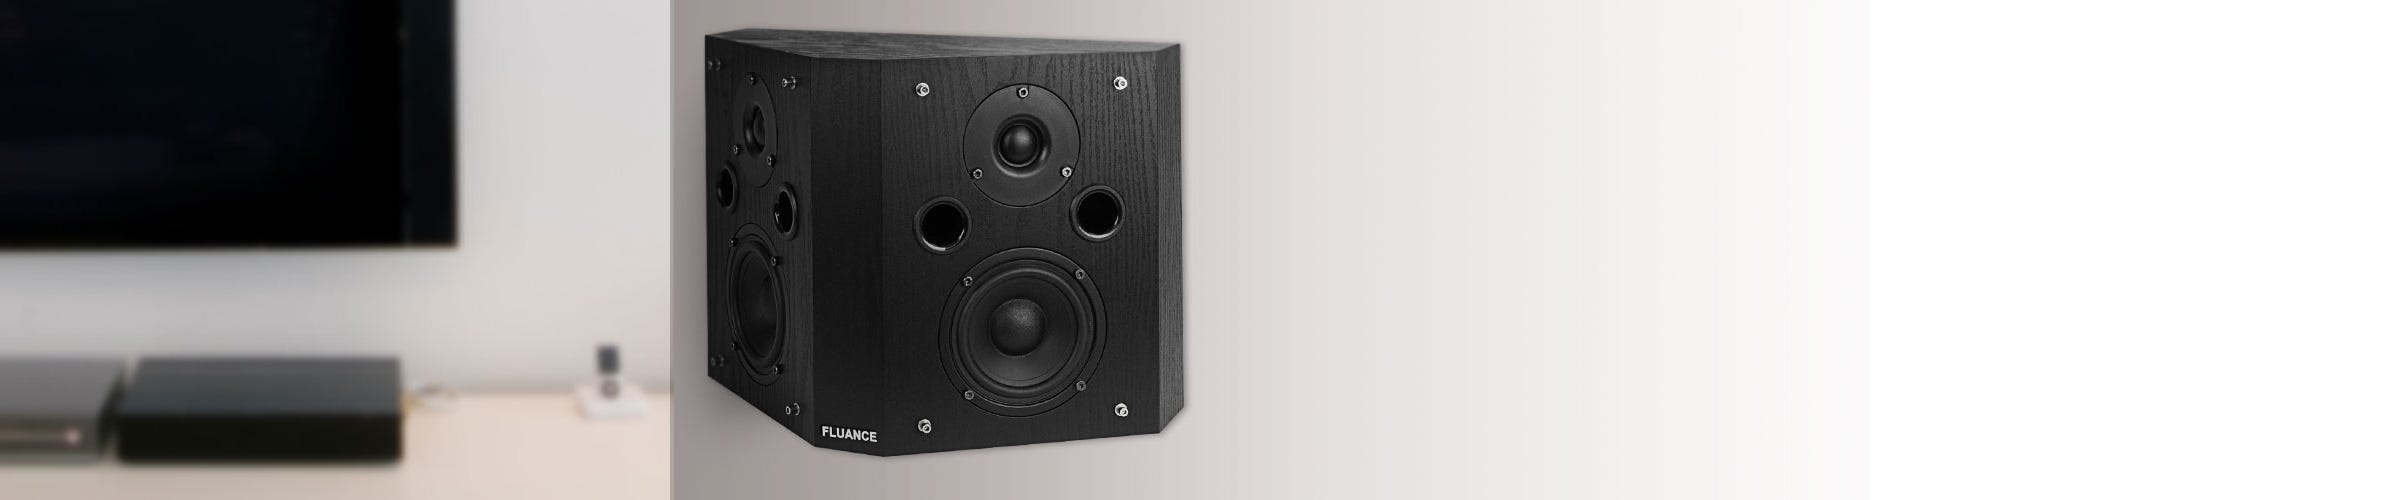 SXBP-BK Bipolar Surround Speaker Intro